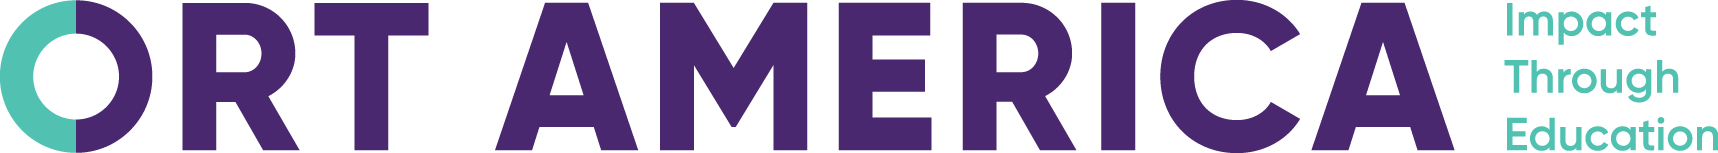 Oa Logo Purple Aqua Rgb